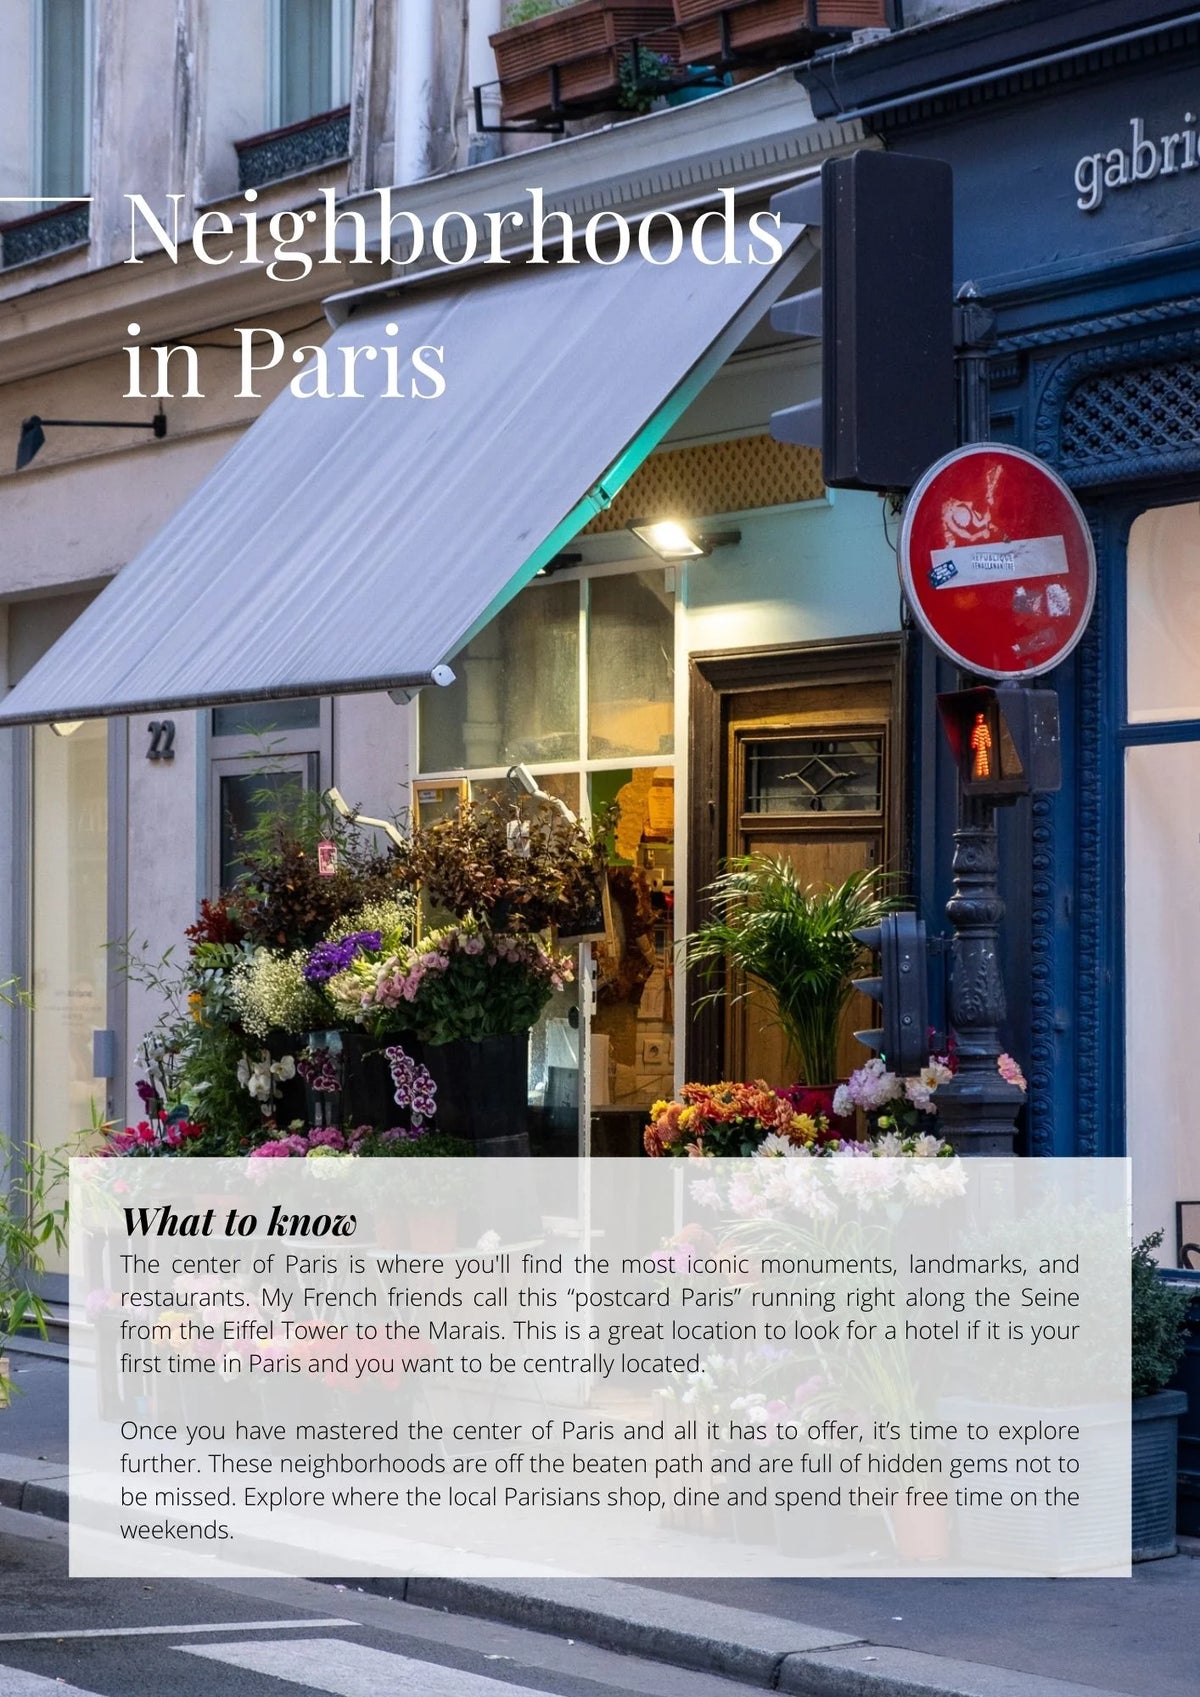 The Paris Guide Printed